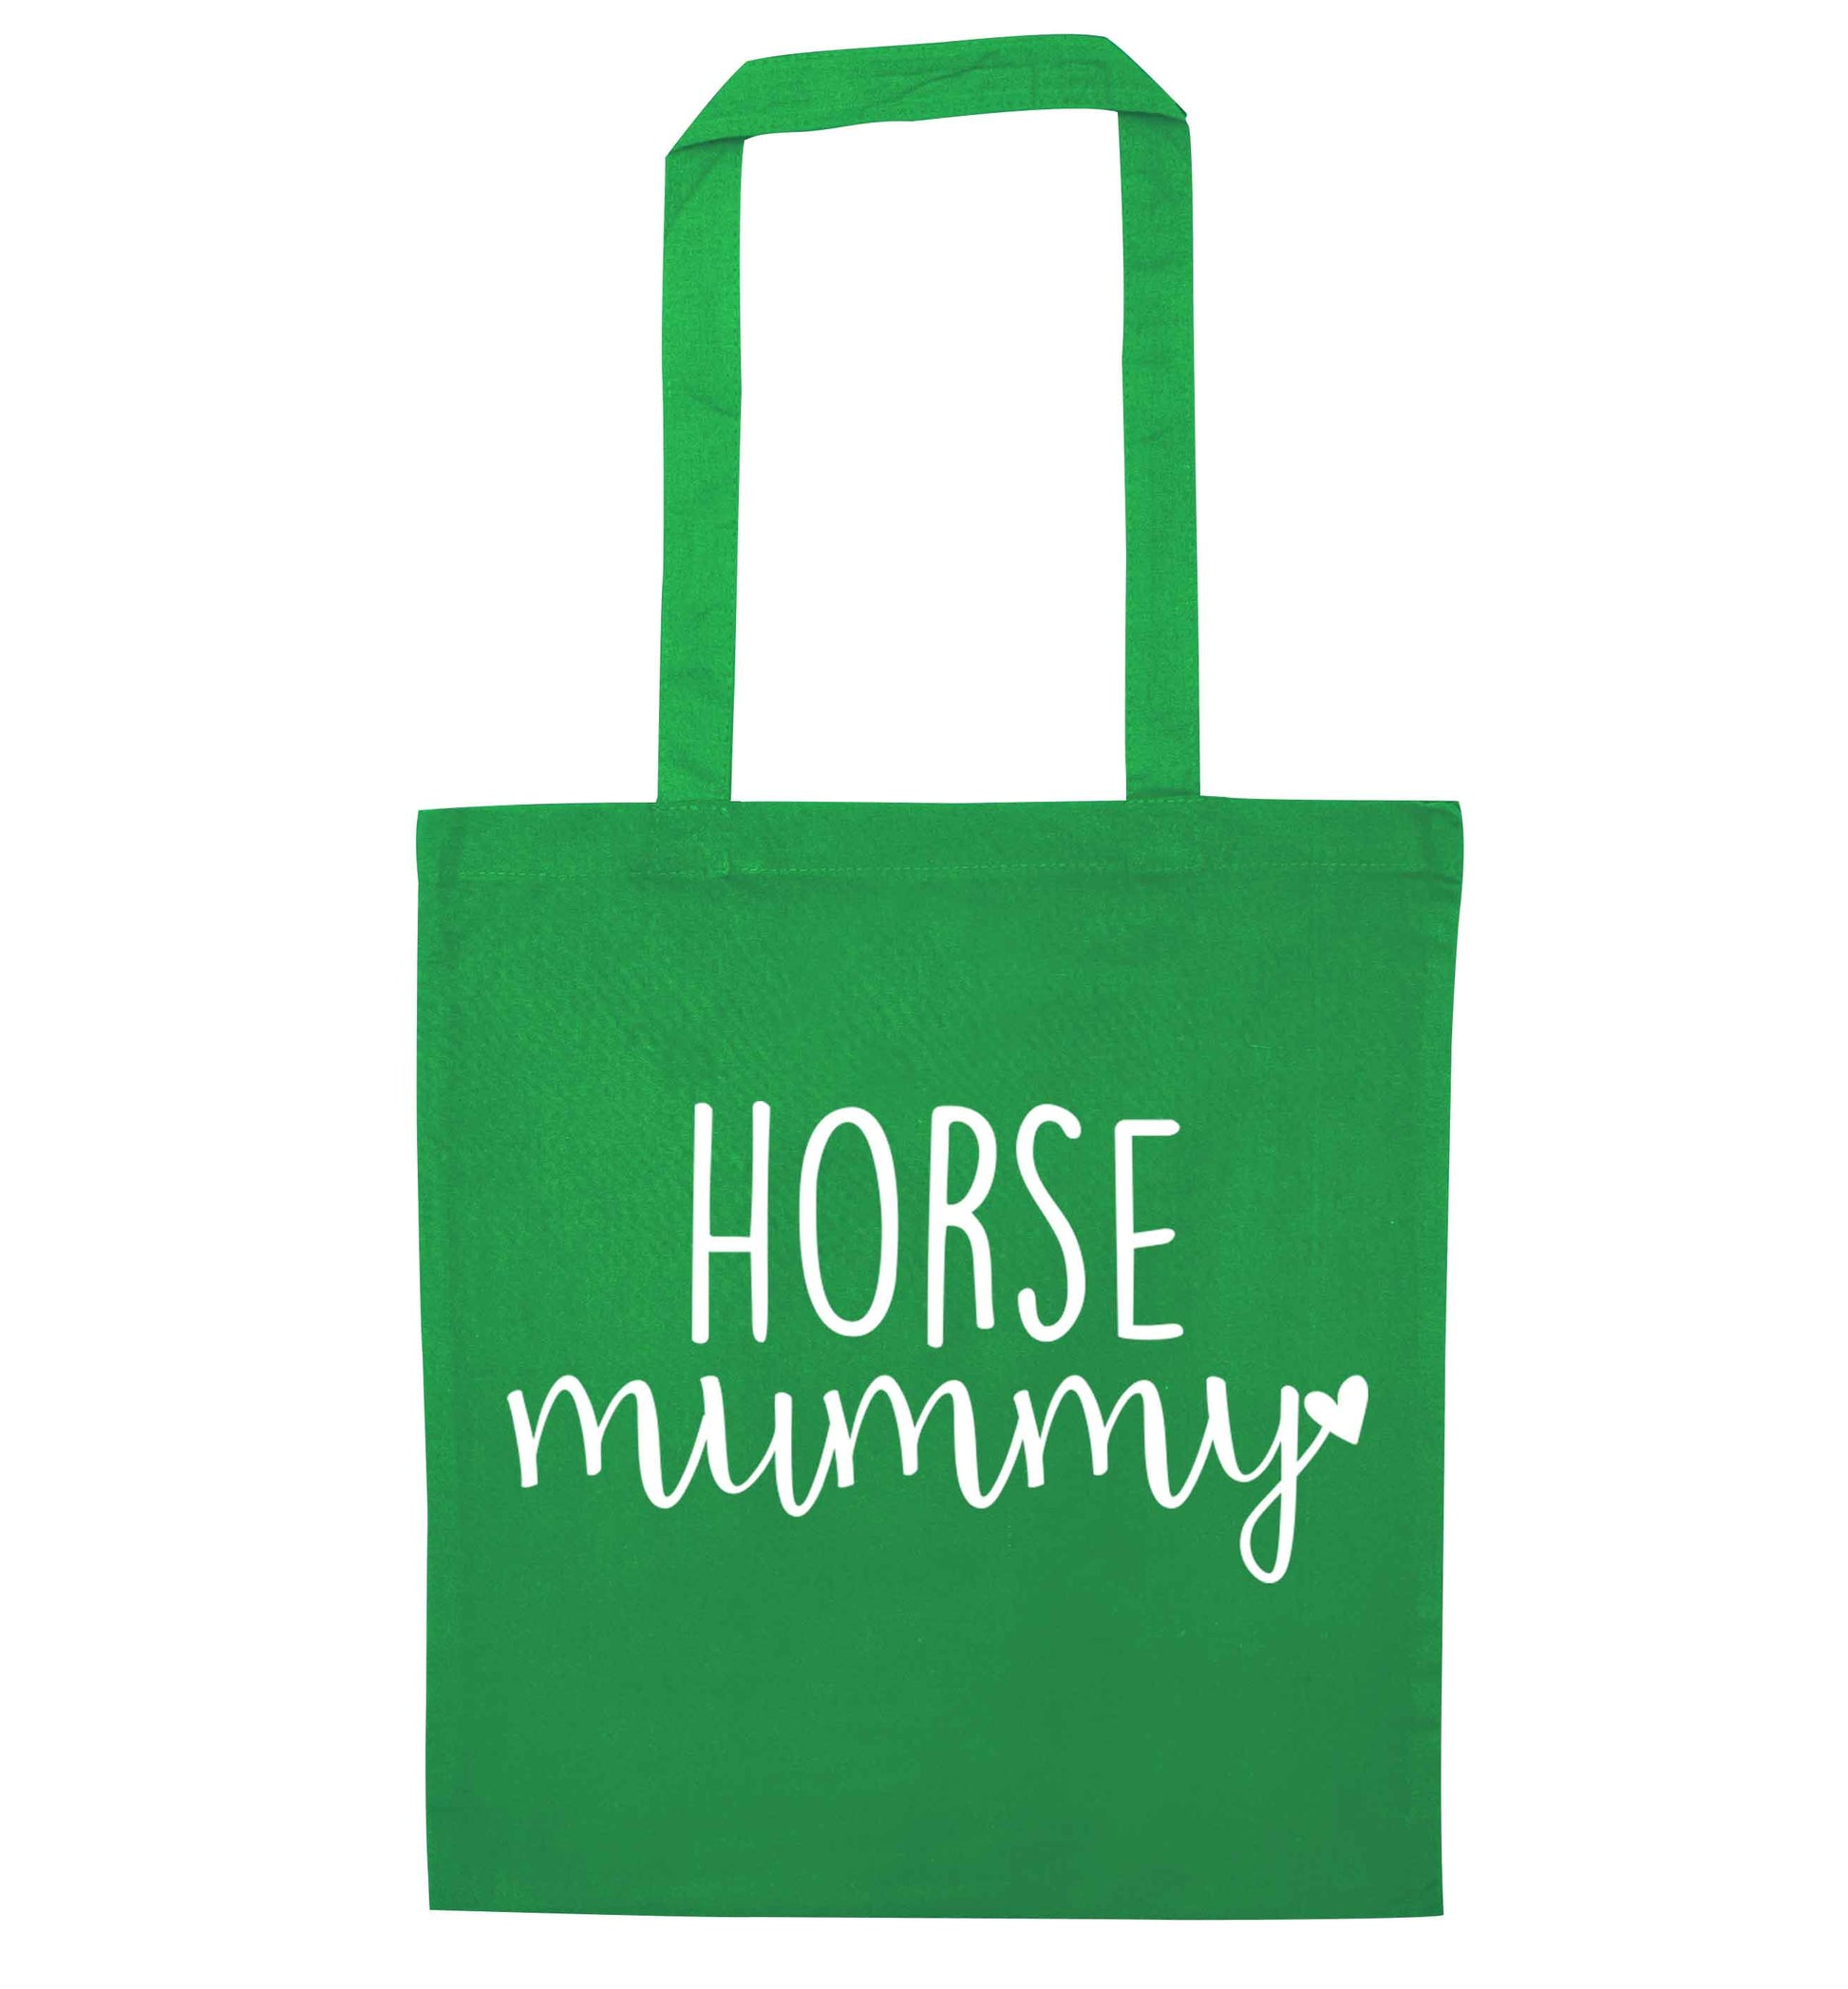 Horse mummy green tote bag